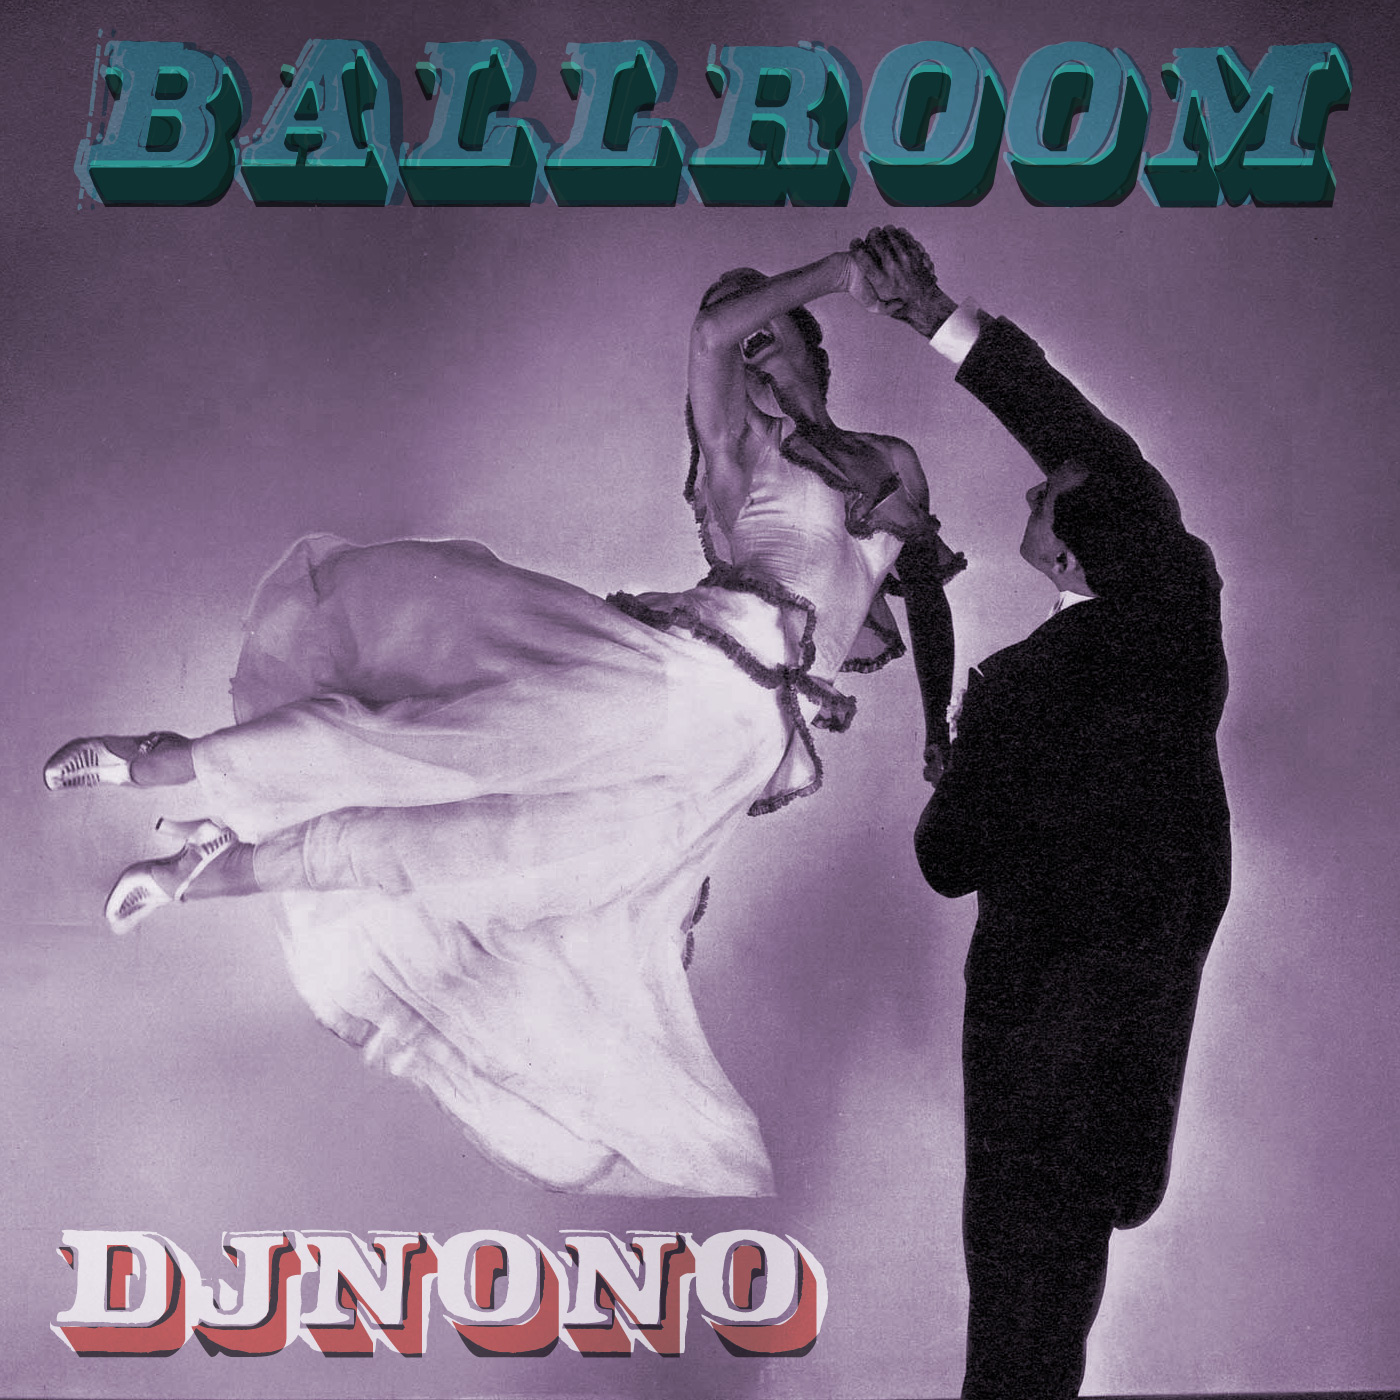 ballroom cover